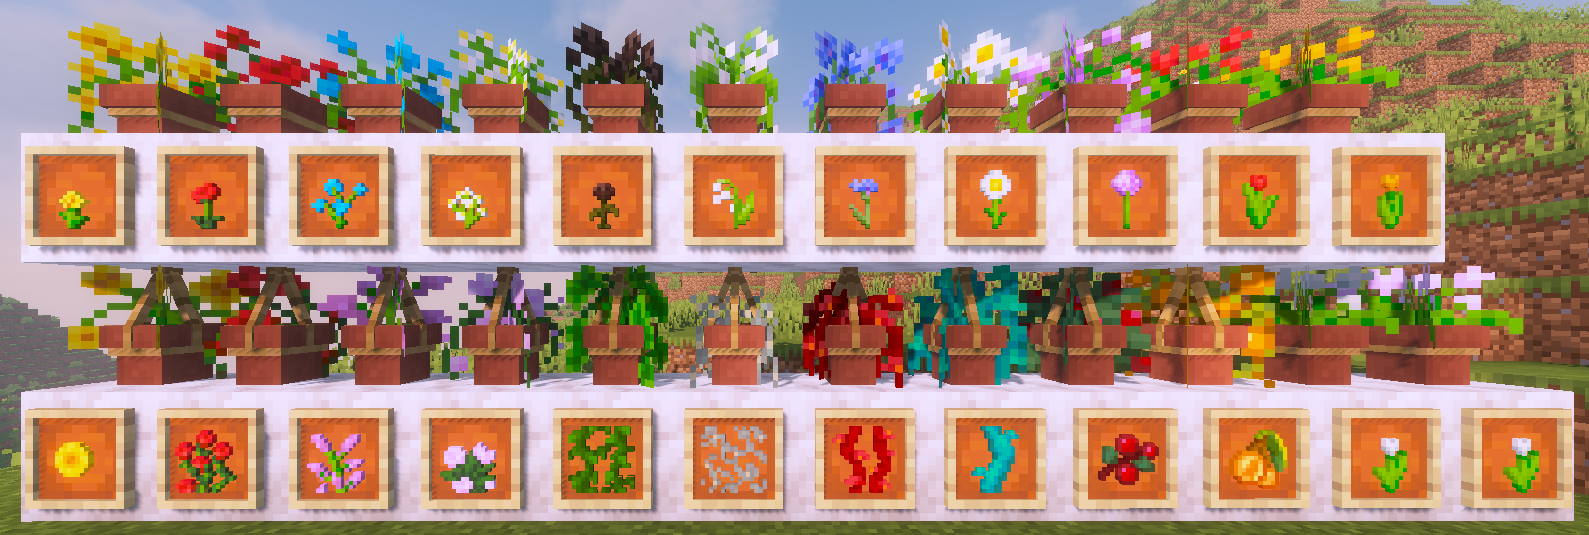 All Flower Pots